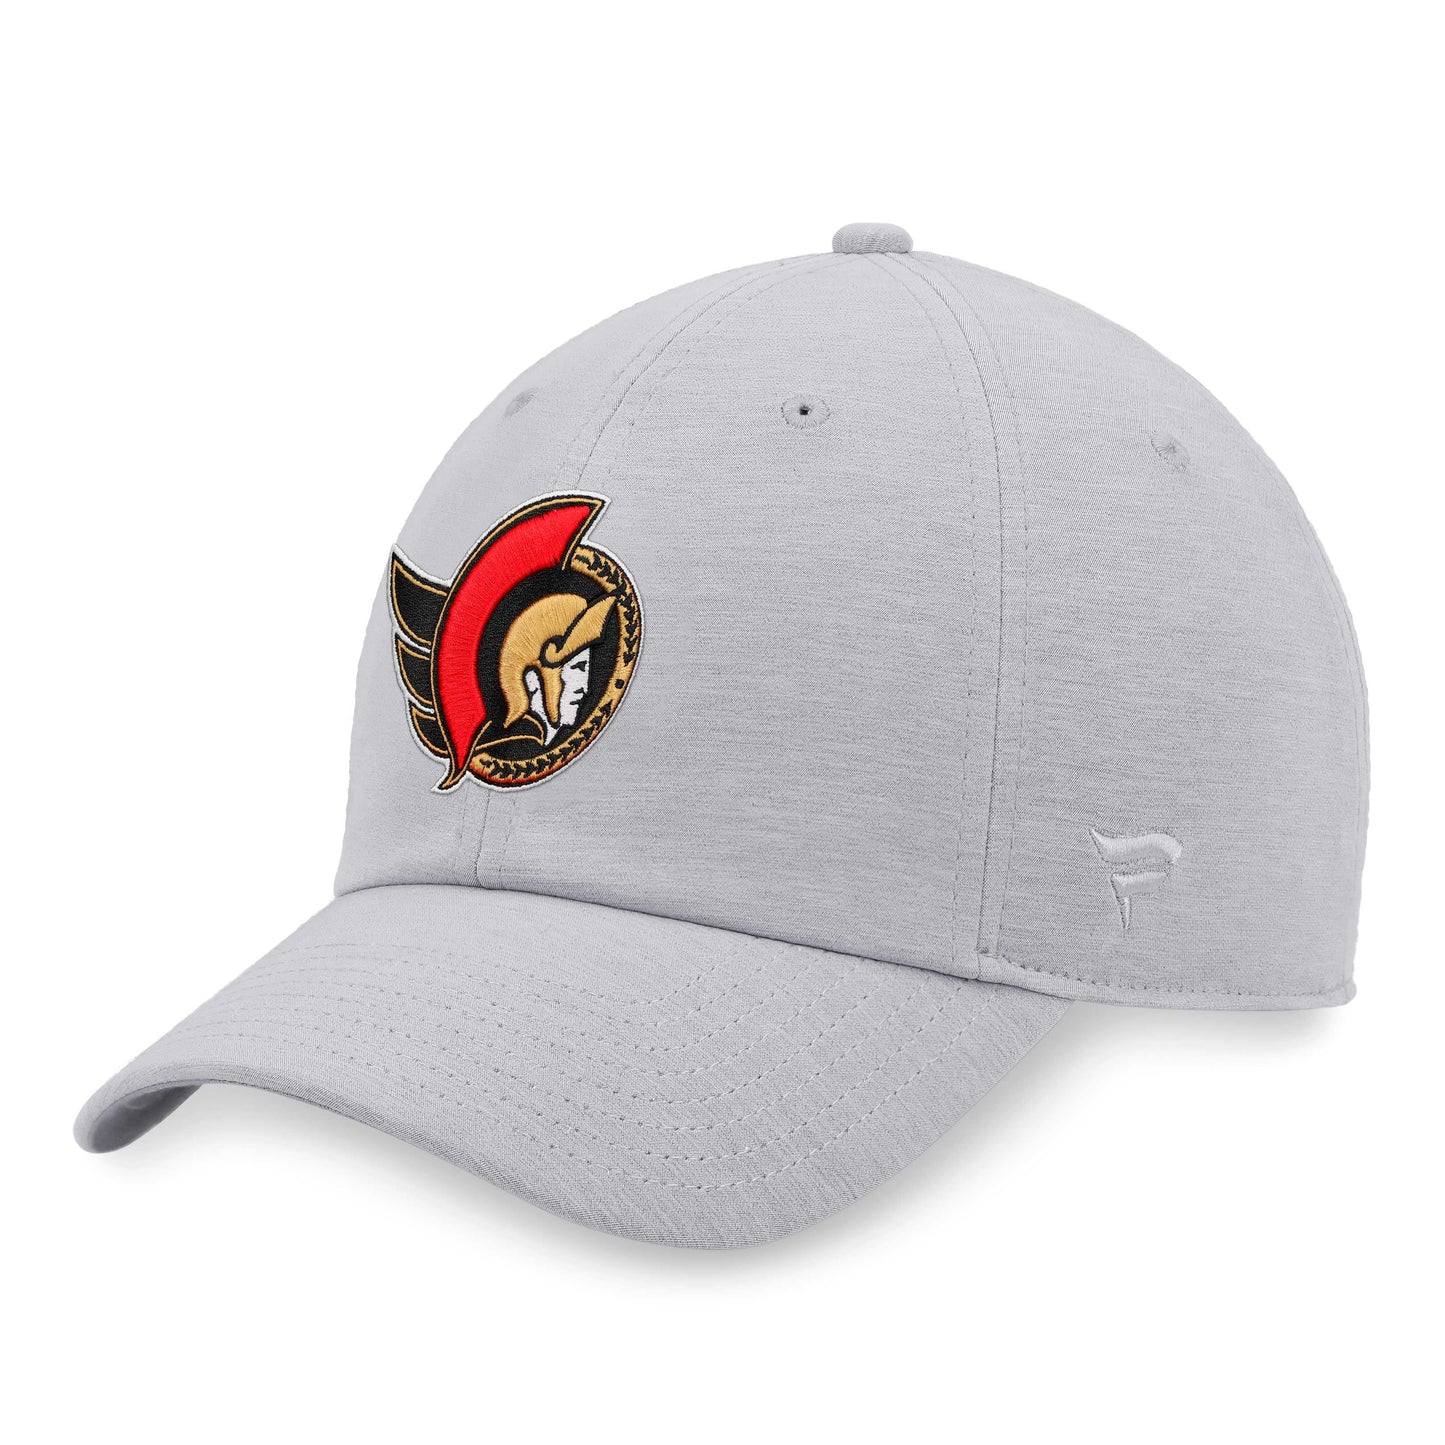 Men's Fanatics Branded Heather Gray Ottawa Senators Logo Adjustable Hat - OSFA